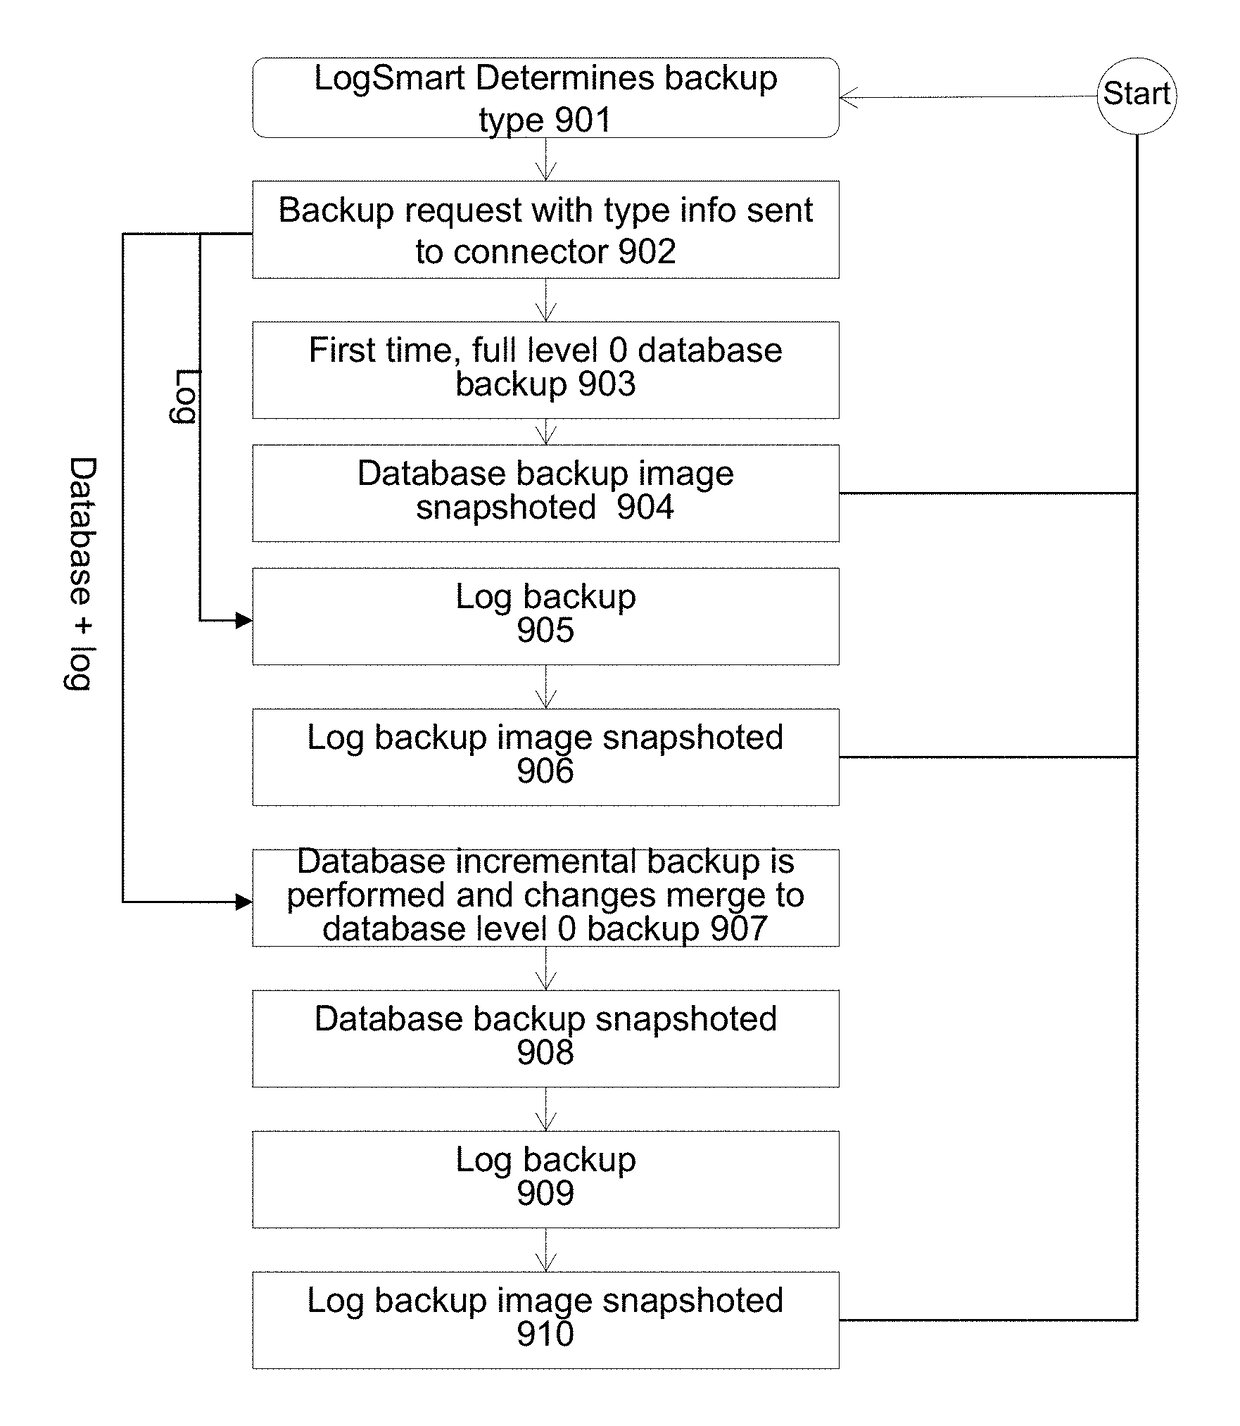 Integrated database and log backup